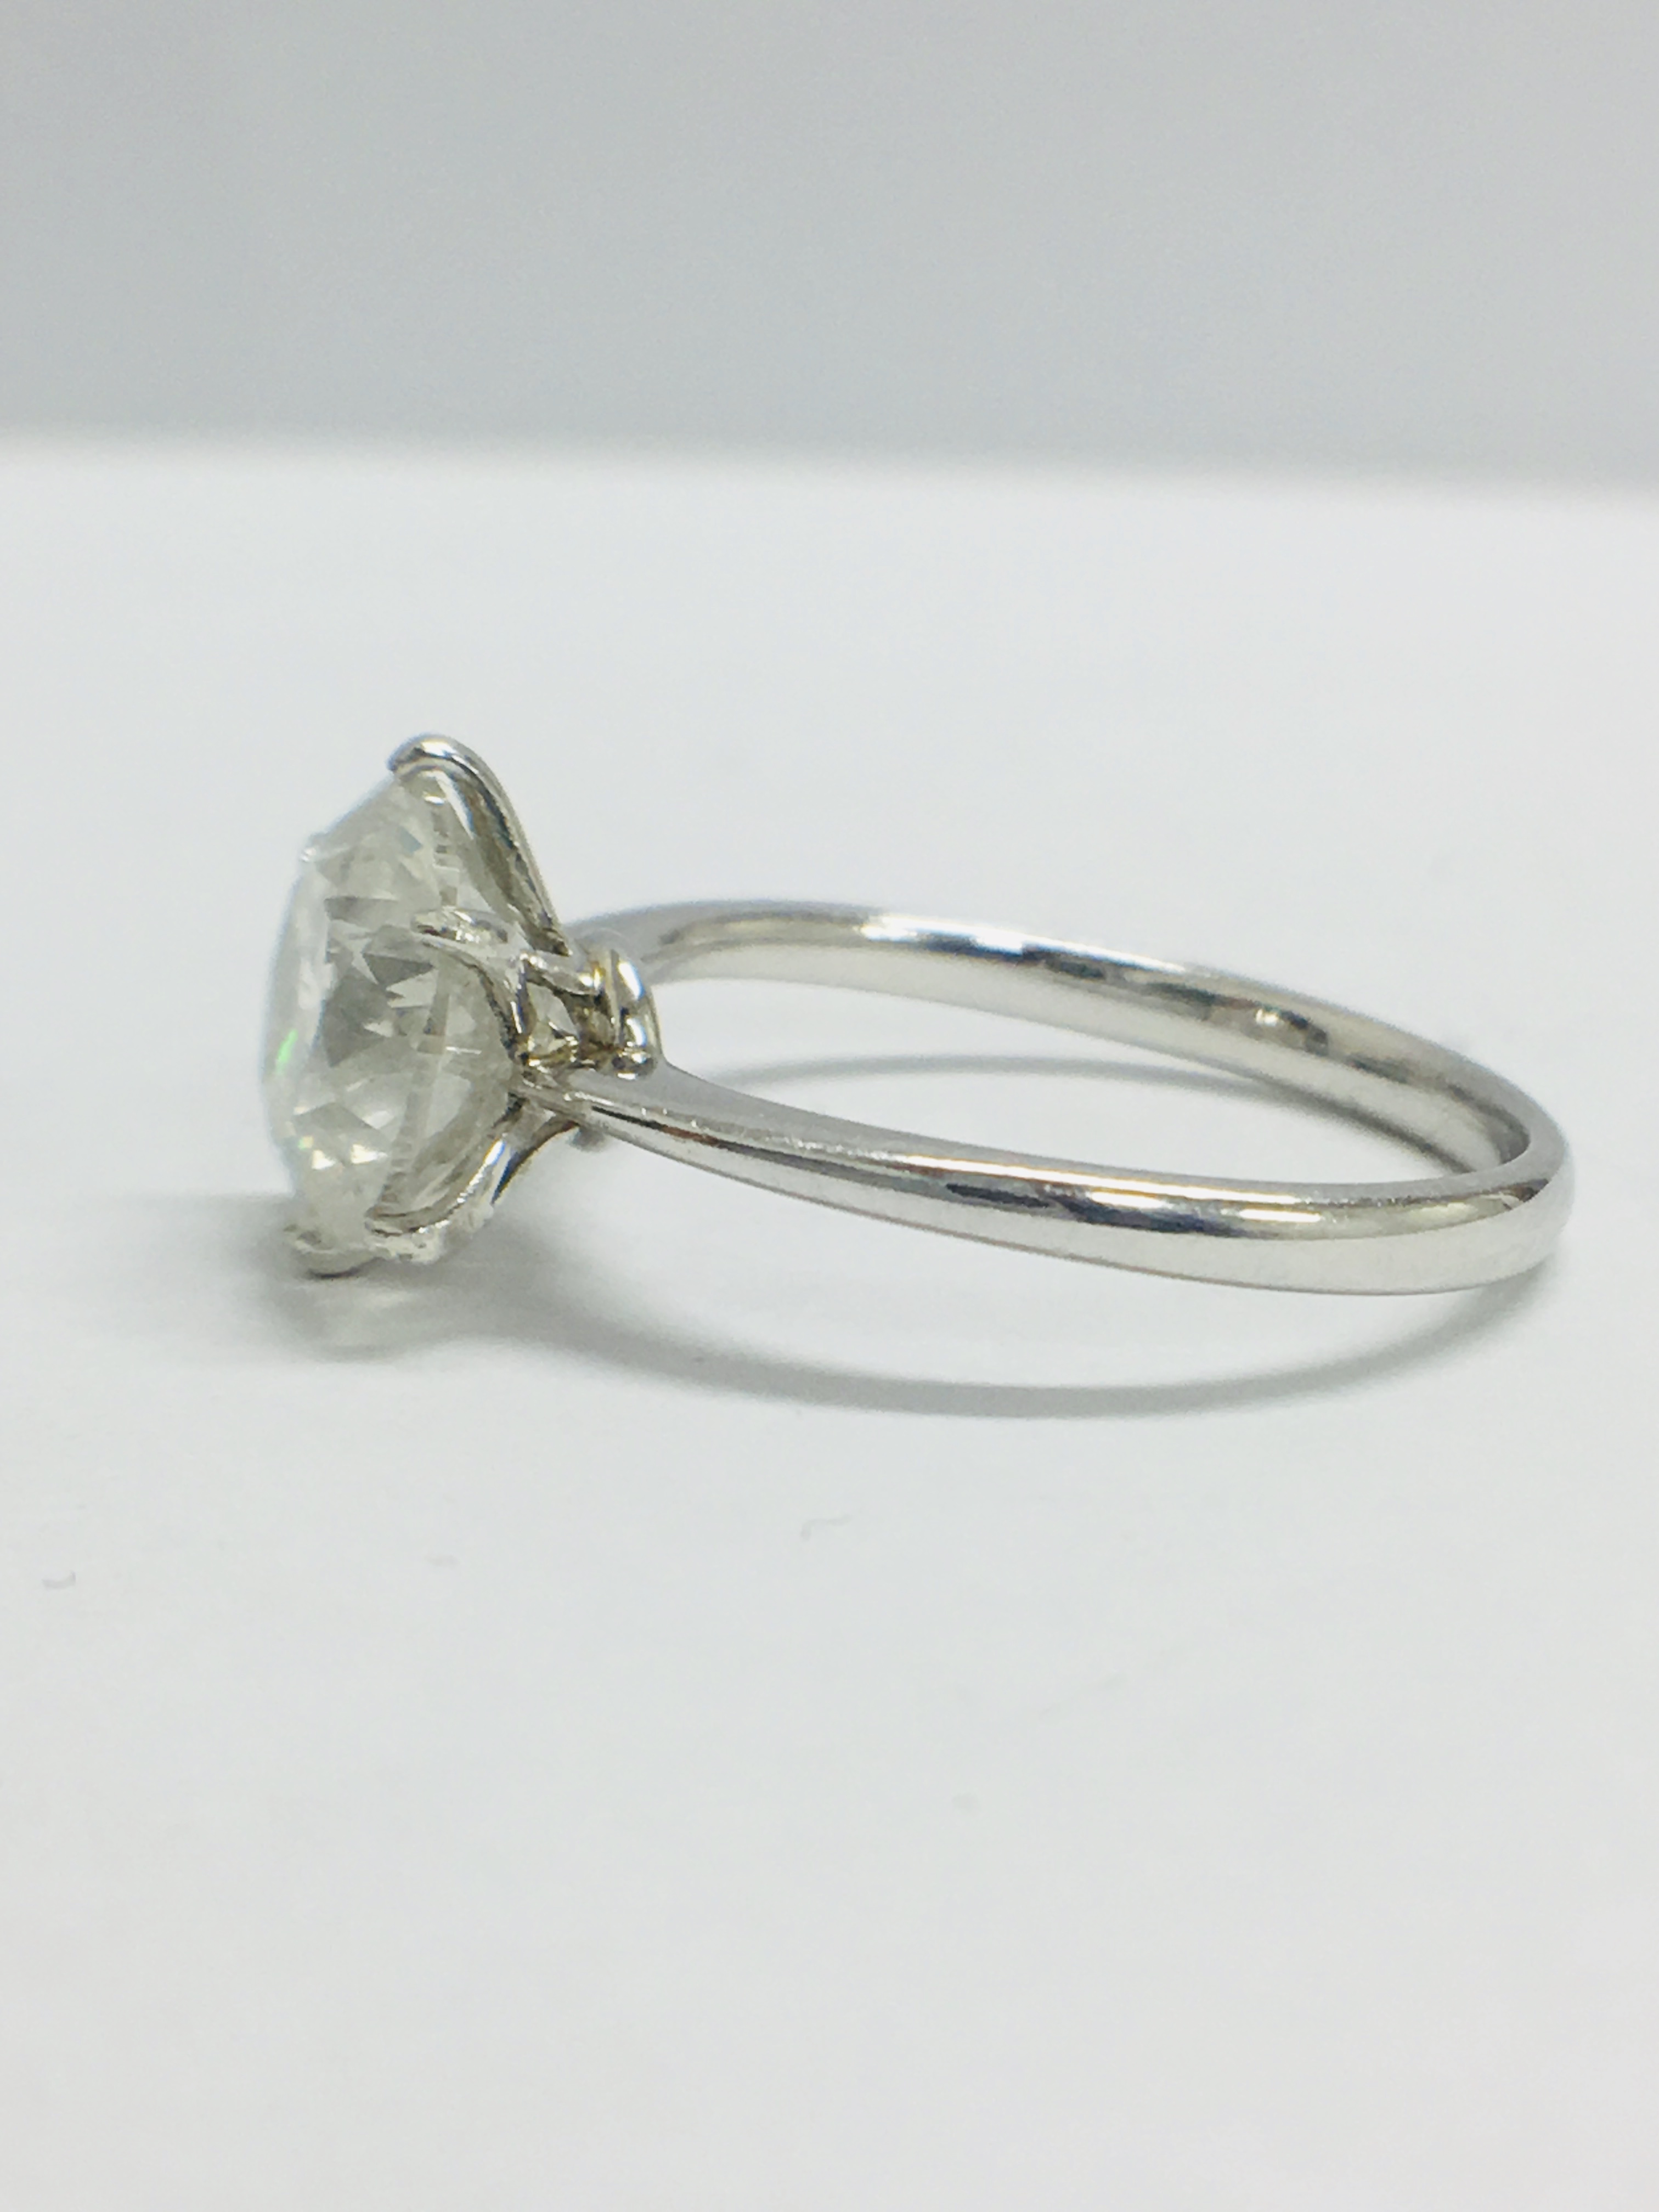 1.80ct diamond solitaire ring set in Platinum setting - Image 3 of 10